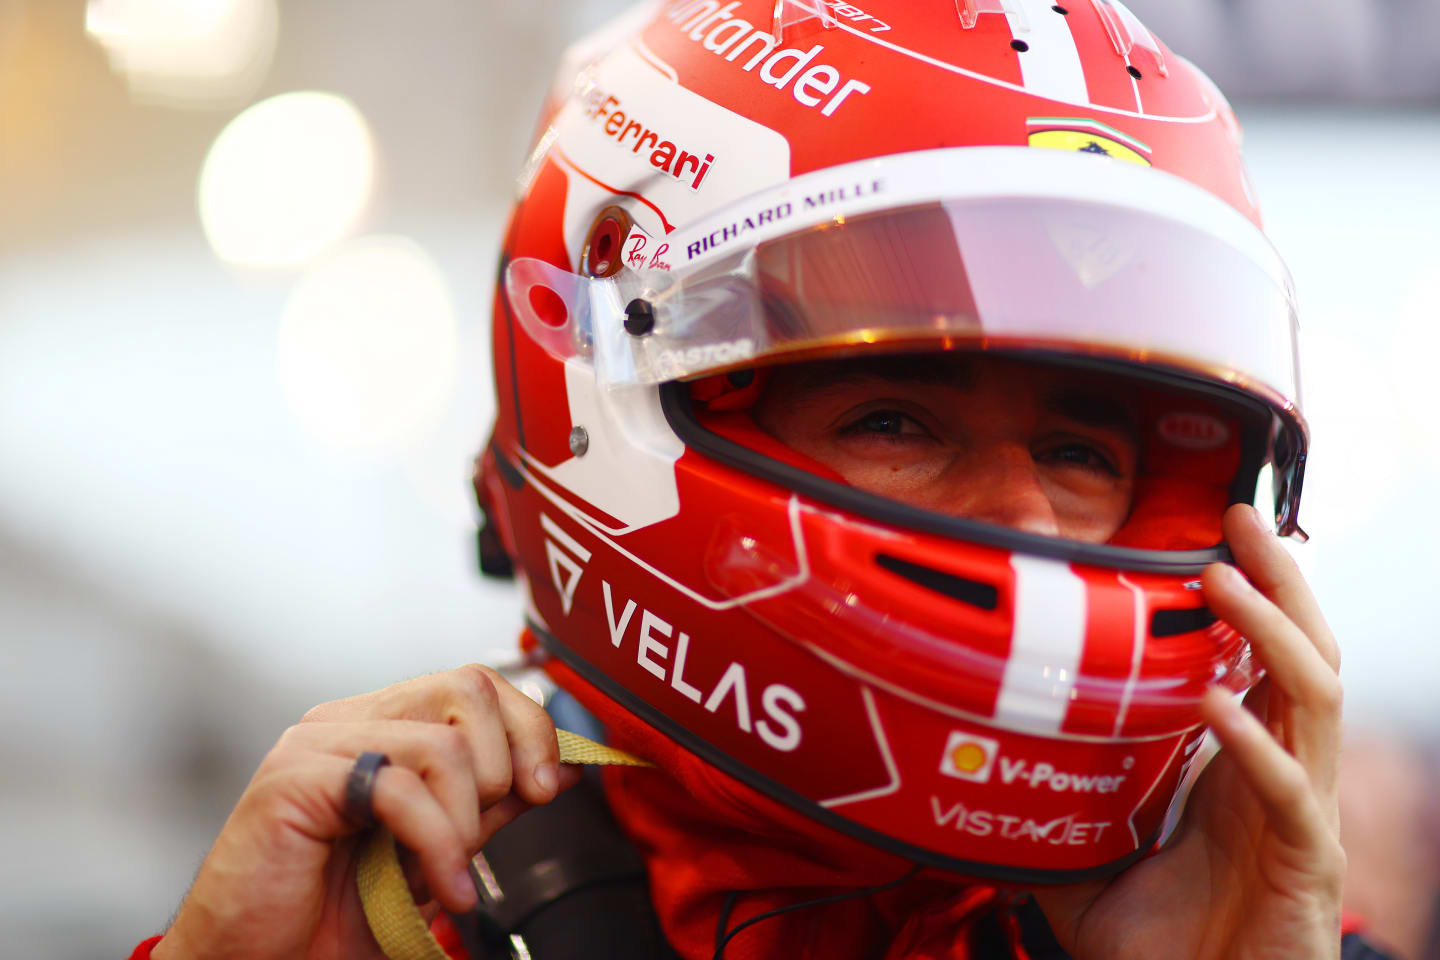 BAHRAIN, BAHRAIN - MARCH 20: Charles Leclerc of Monaco and Ferrari prepares to drive on the grid